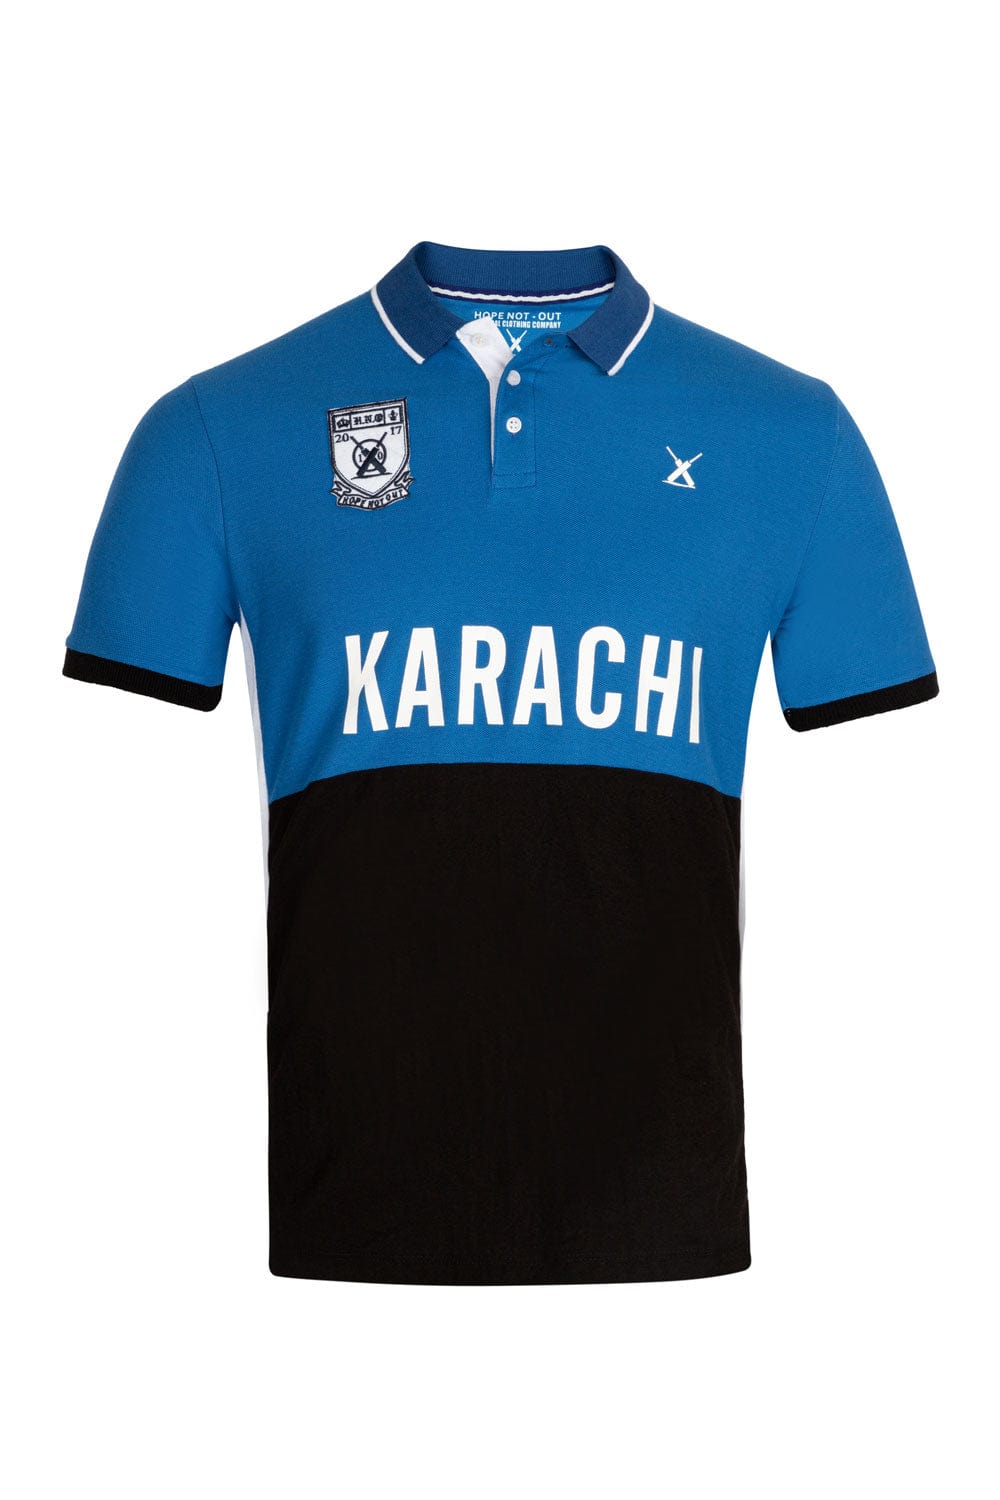 Hope Not Out by Shahid Afridi Men Polo Shirt PSL 6 Karachi Kings Blue Polo